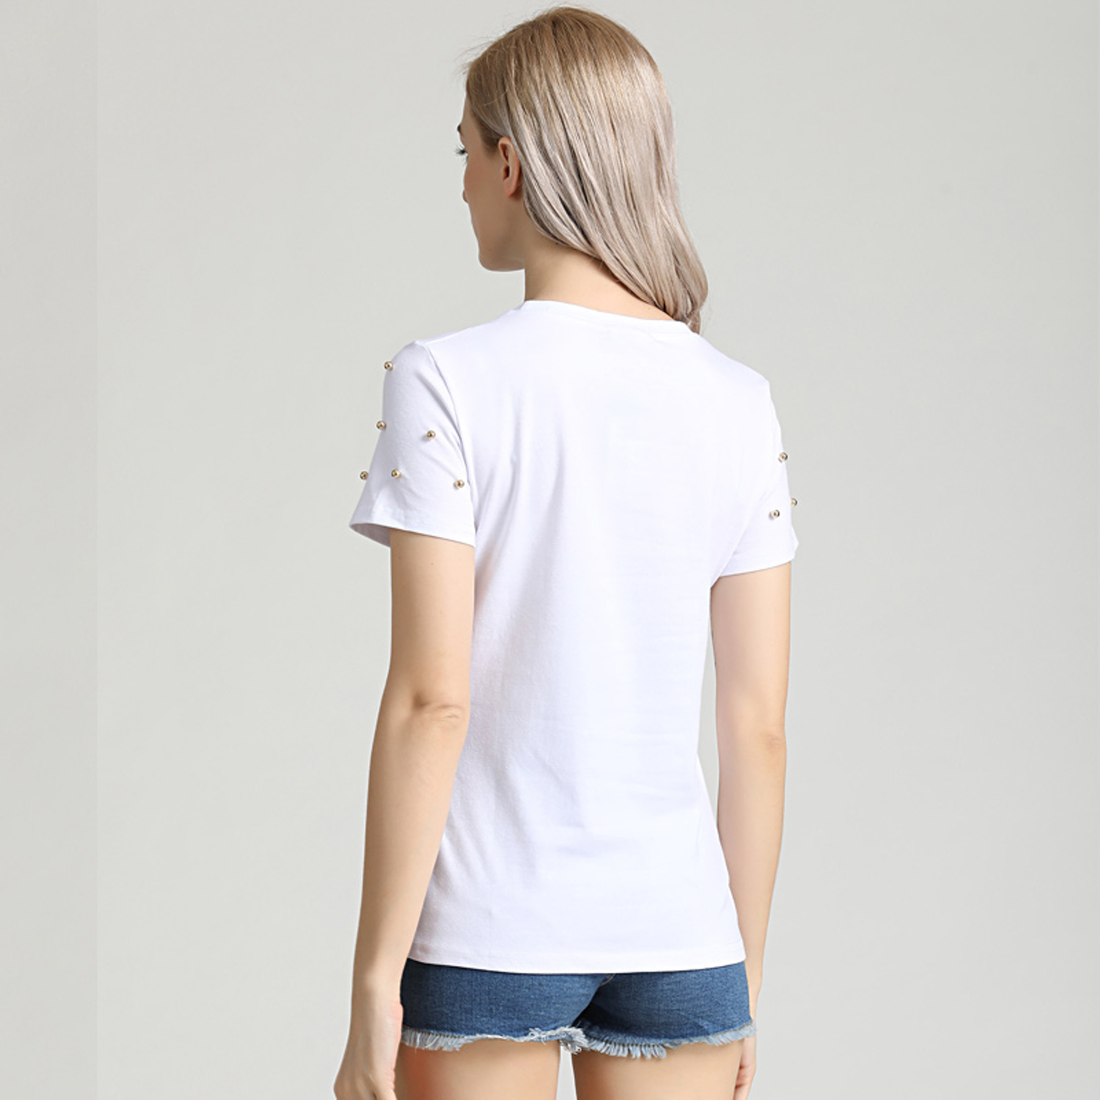 Women's Summer Casual Sequined T-Shirt